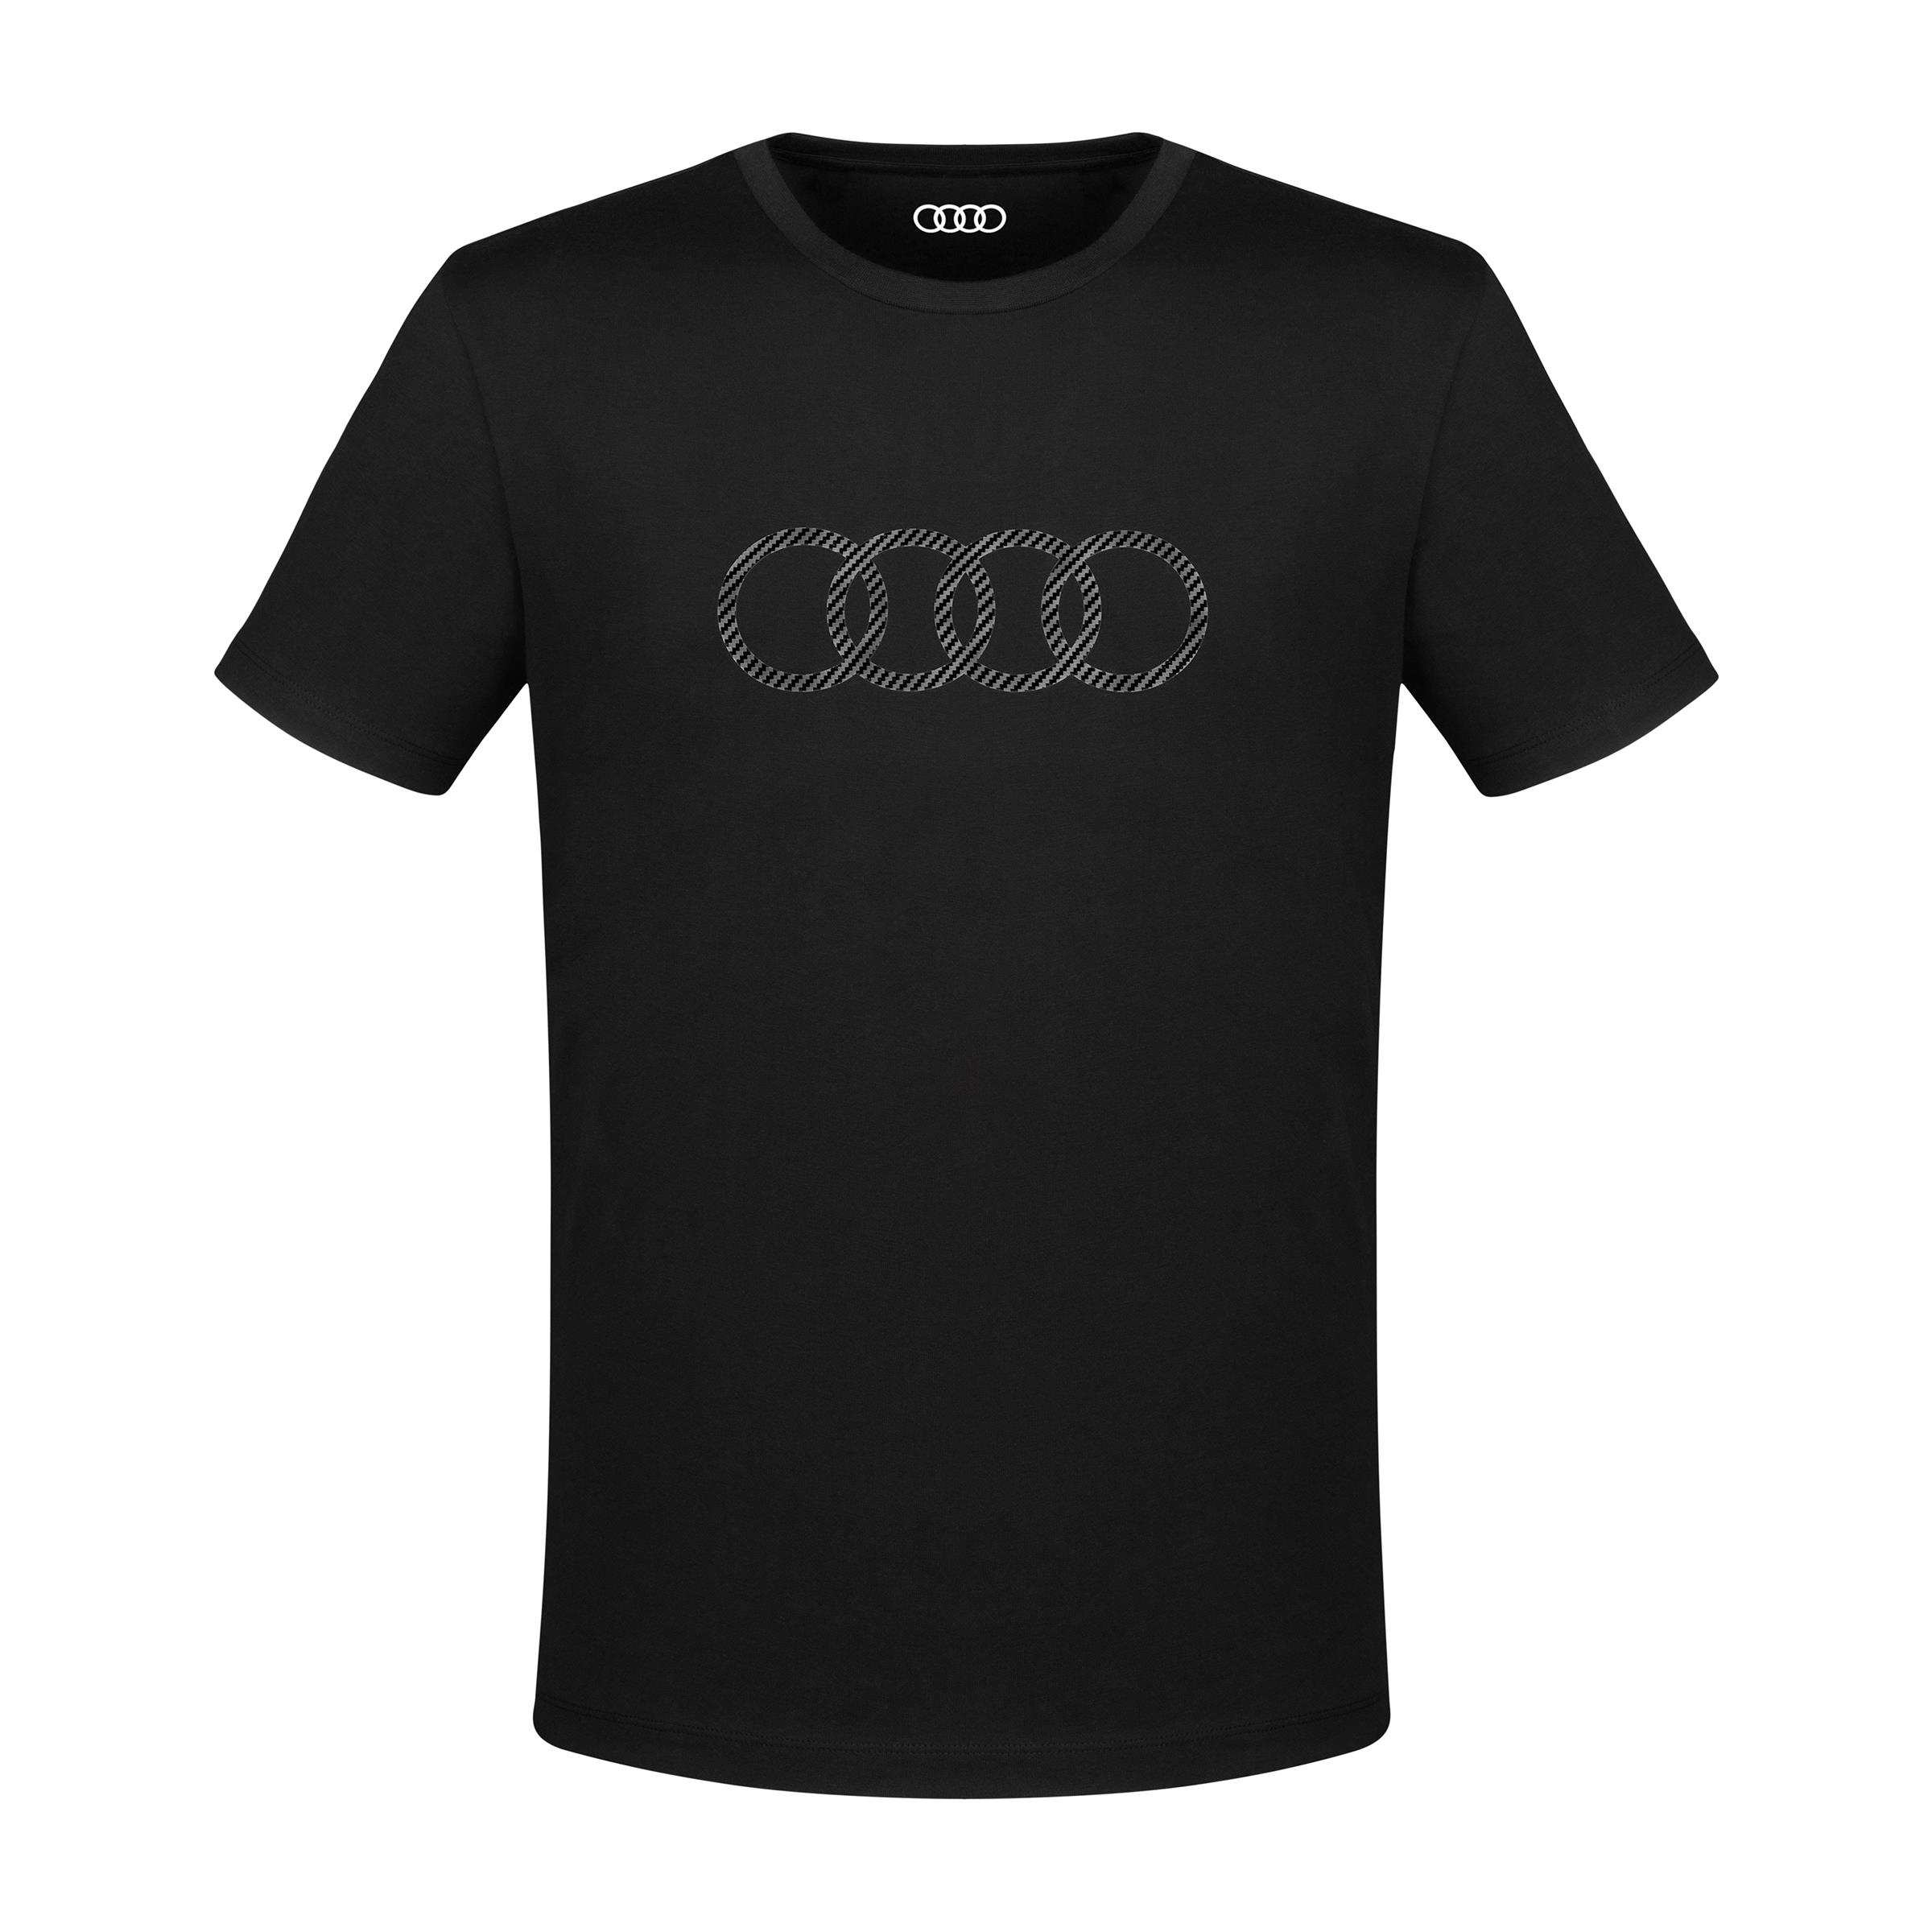 Original Audi T-Shirt Ringe 3XL, Herren, schwarz B-Ware OVP fehlt 